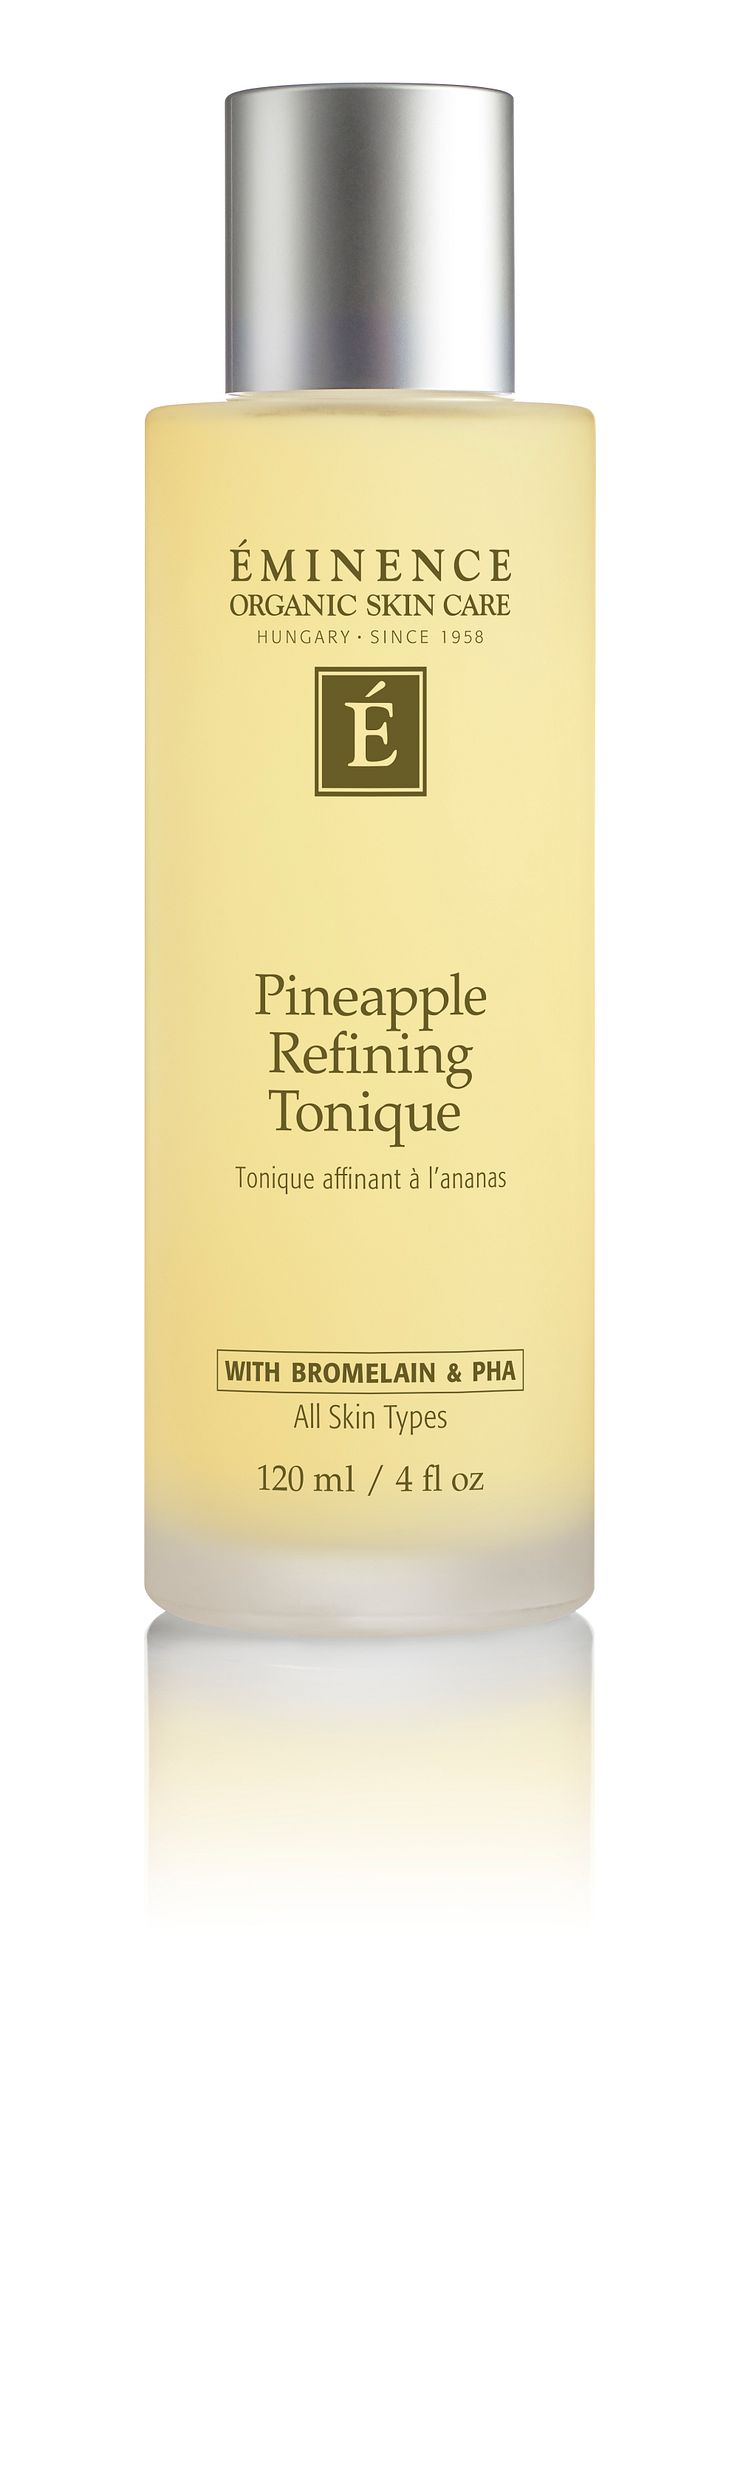 Eminence-Organics-Pineapple-Refining-Tonique-Retail